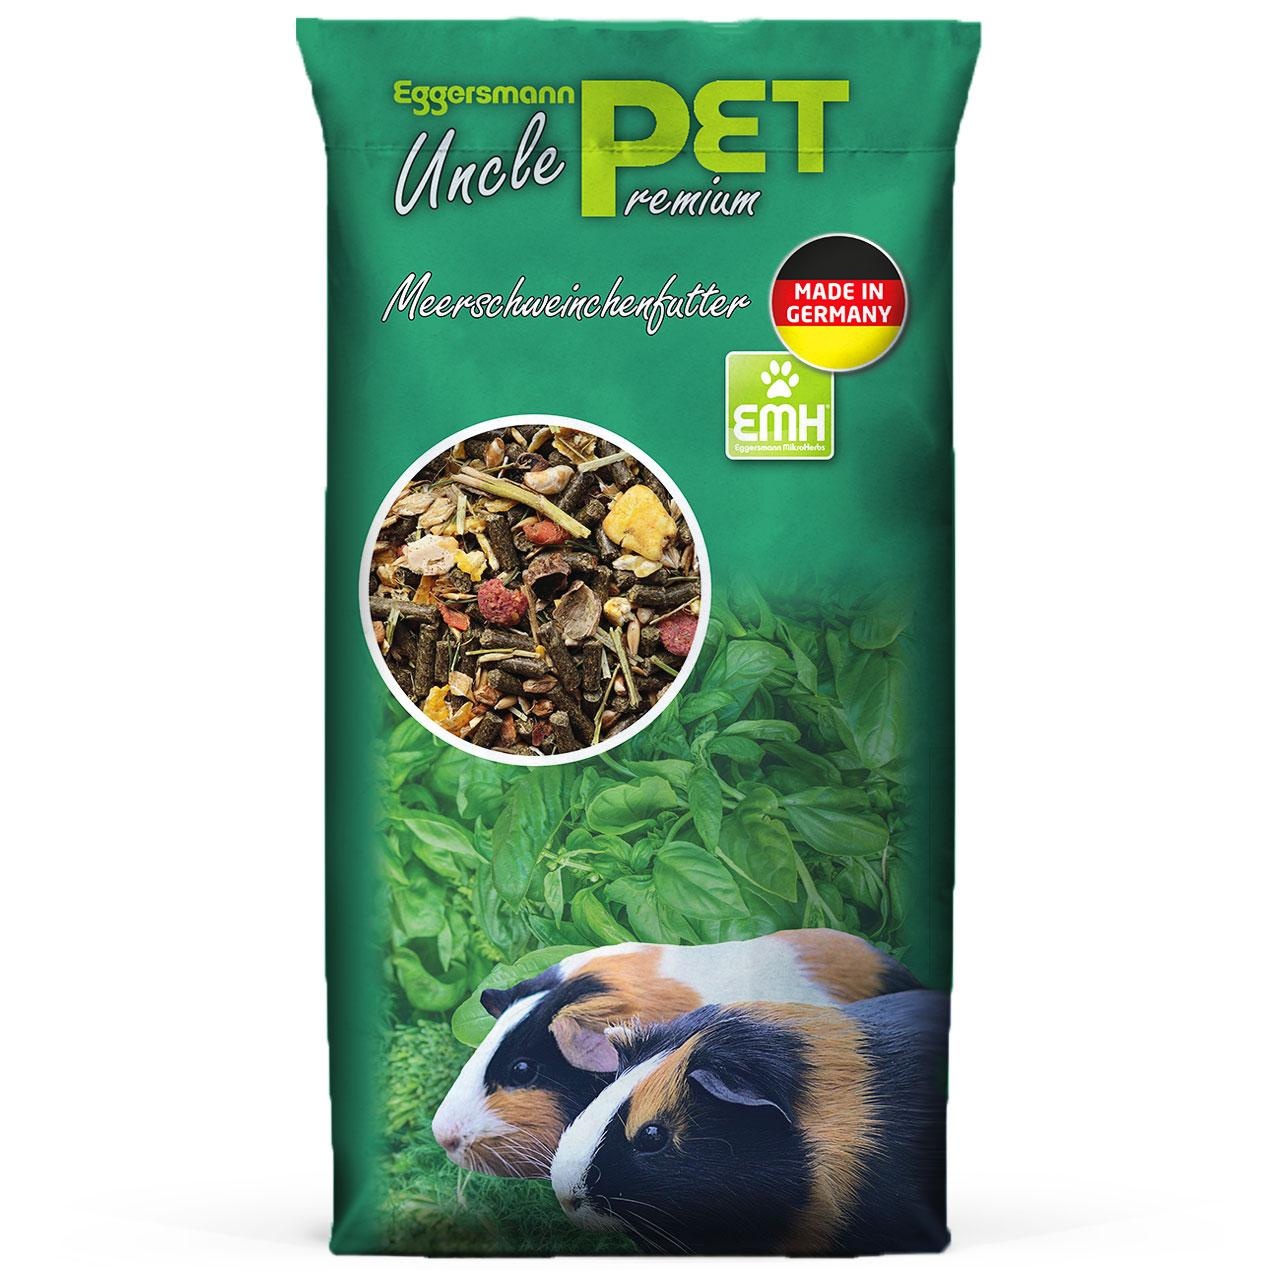 Uncle Pet - Premium Meerschweinchenfutter 15 kg